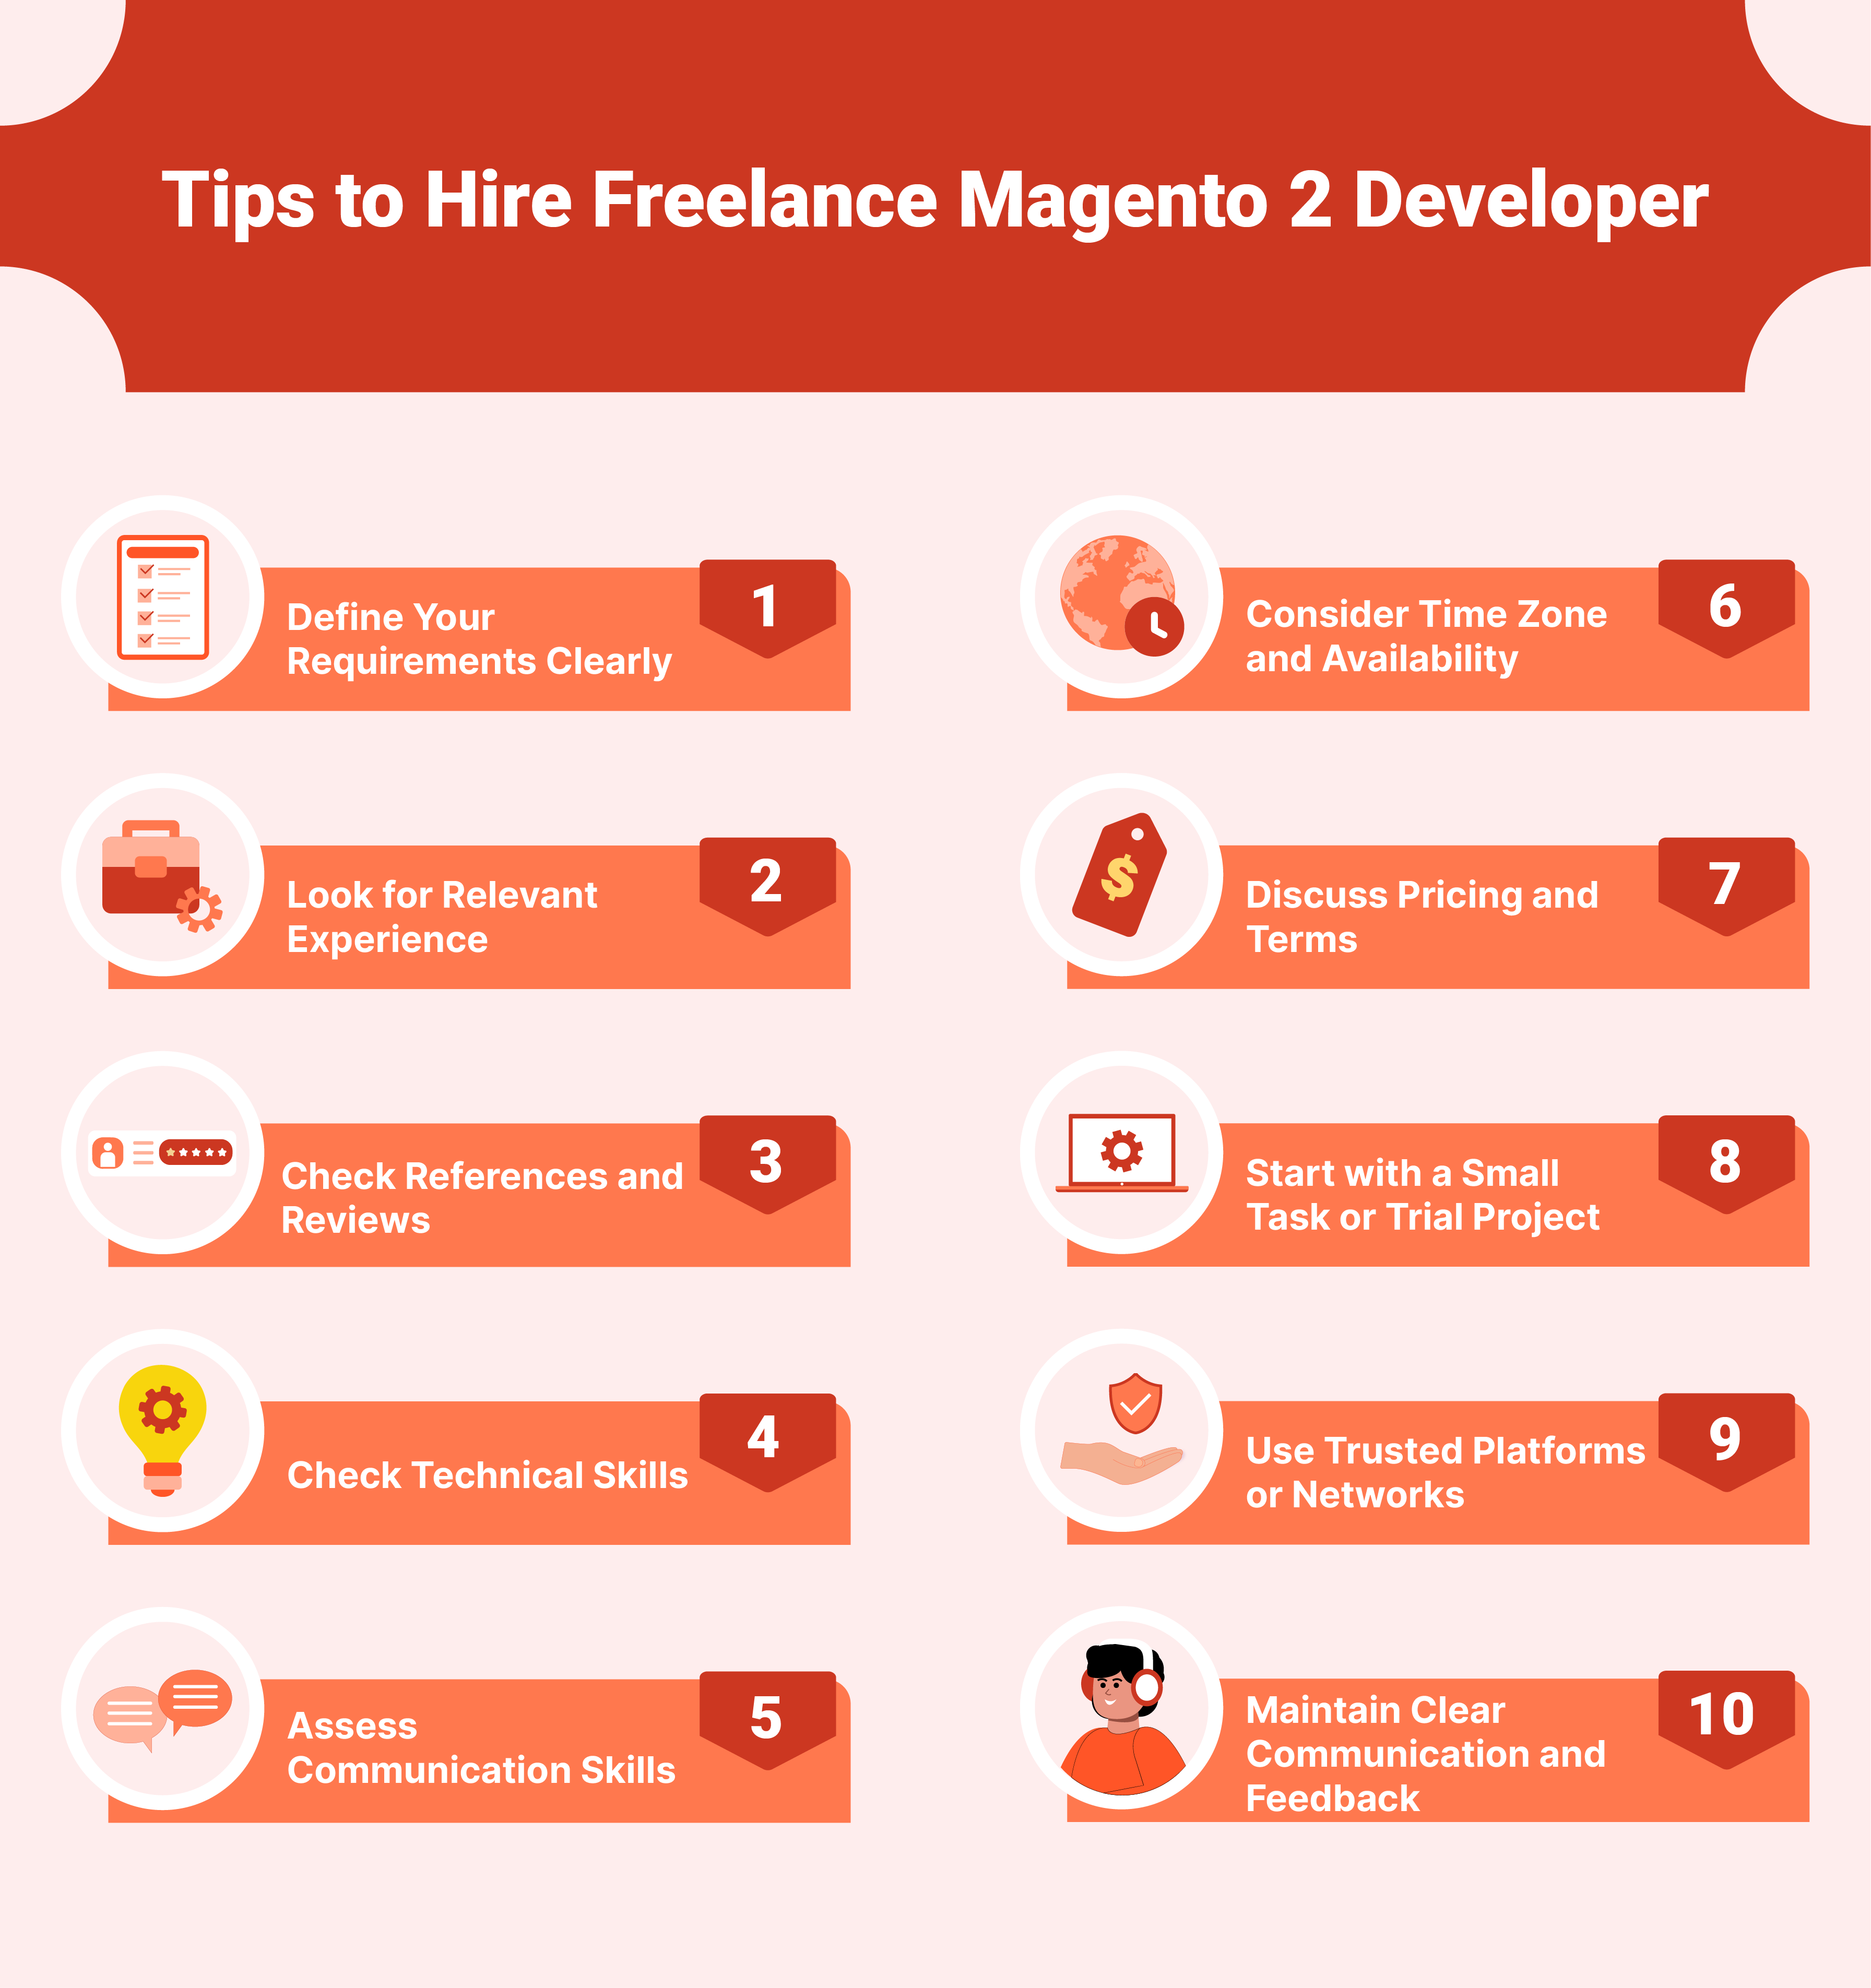 Tips to Hire Freelance Magento 2 Developer